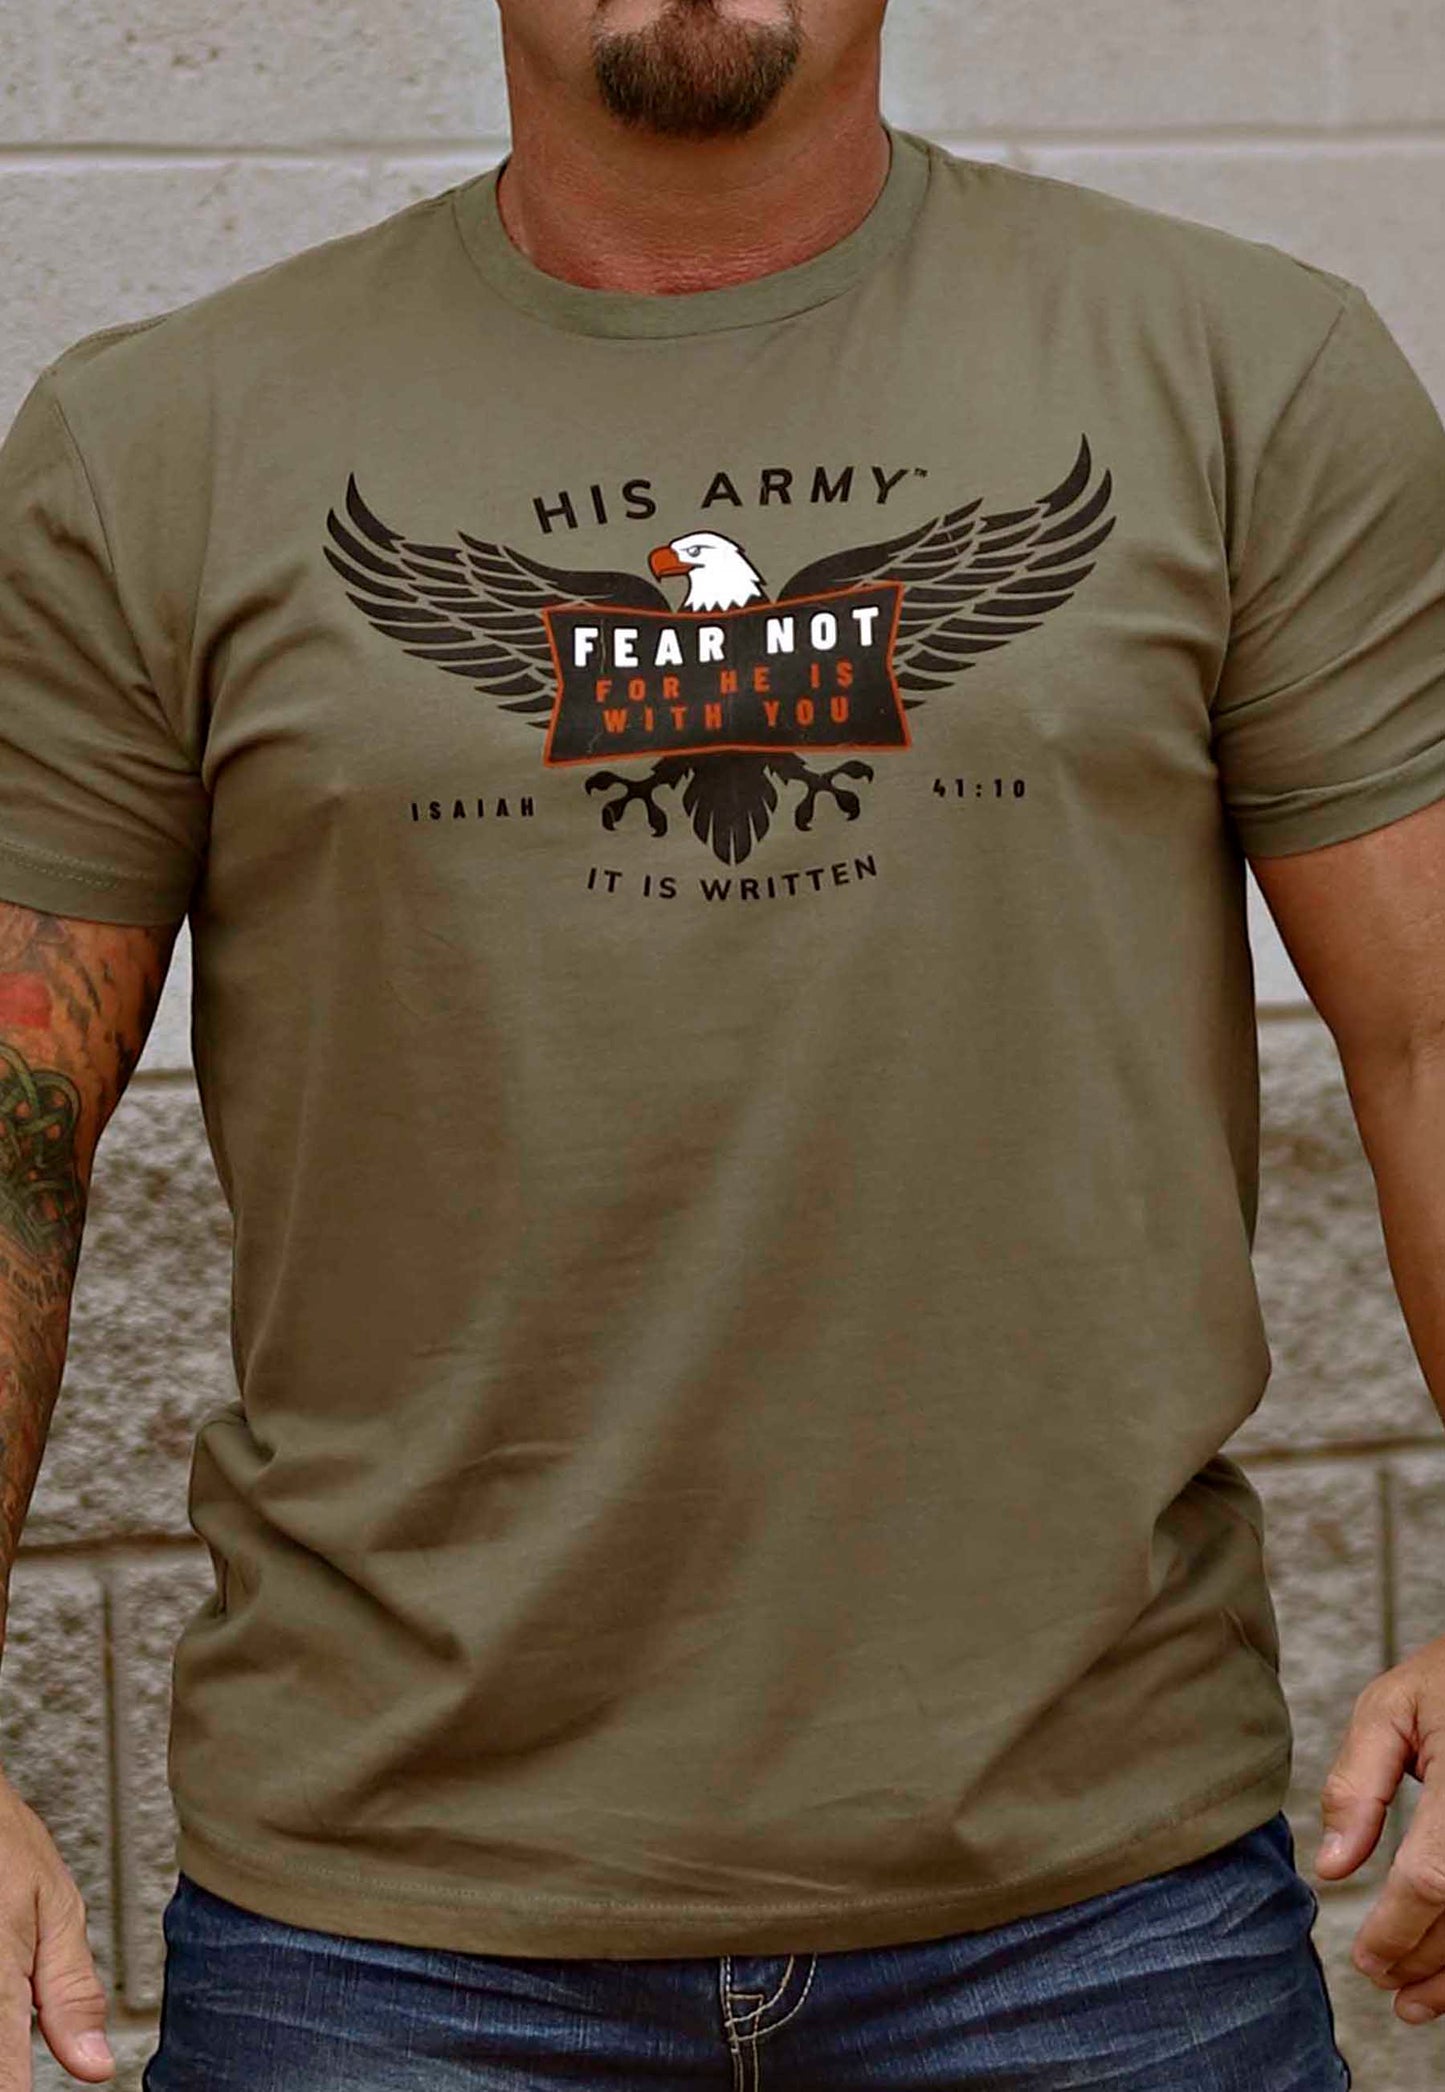 Christian patriot t-shirt on model